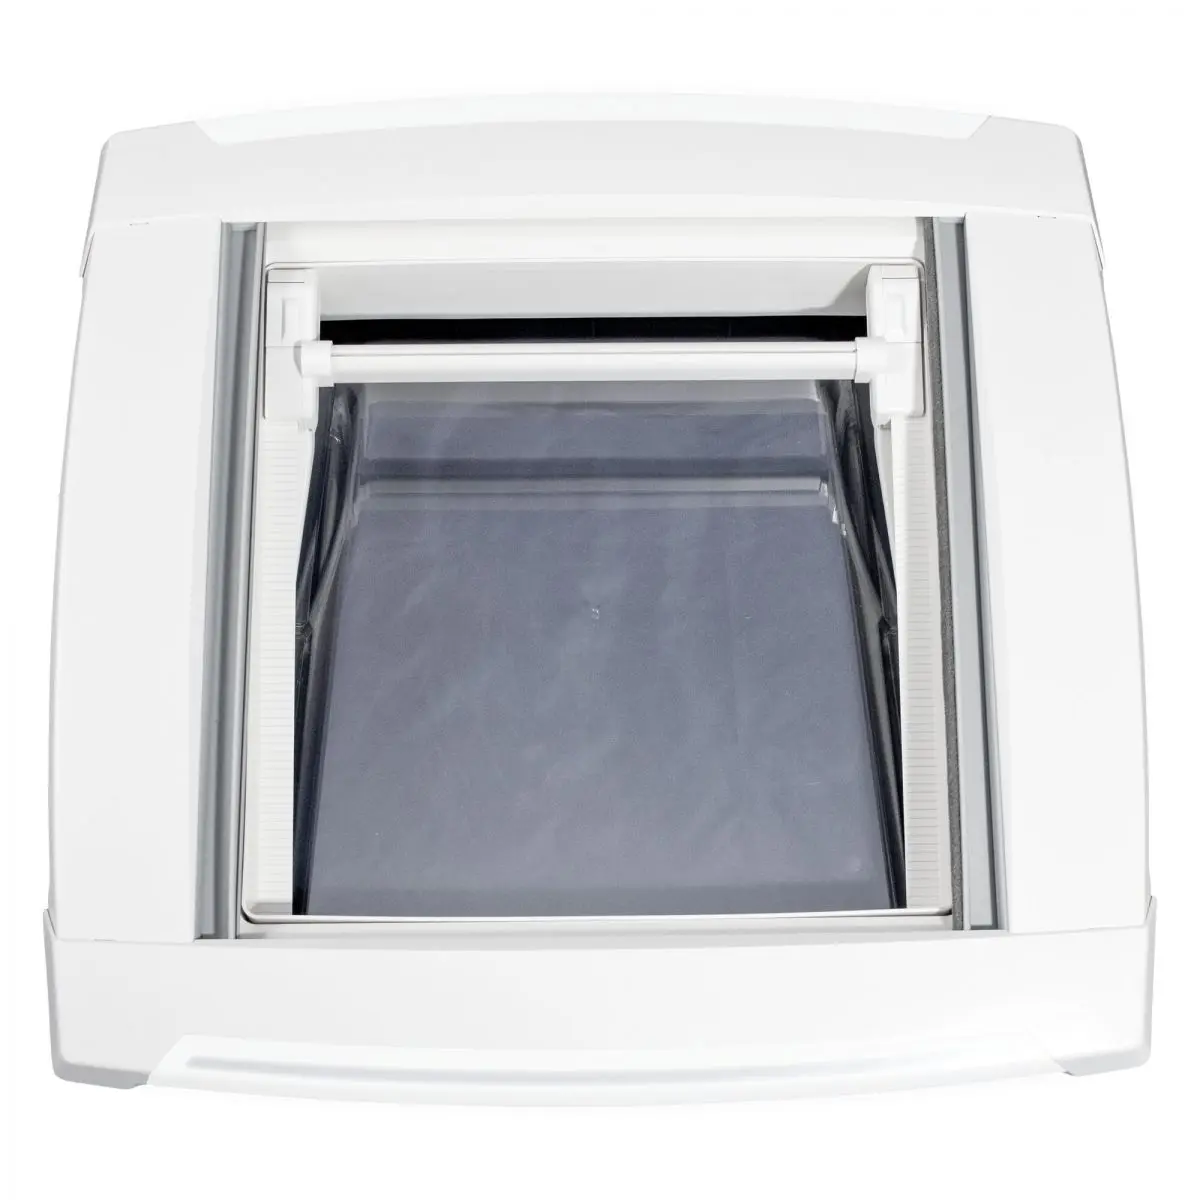 Capac de acoperiș Vision Star M pentru 2 - LED, 400 x 400 mm